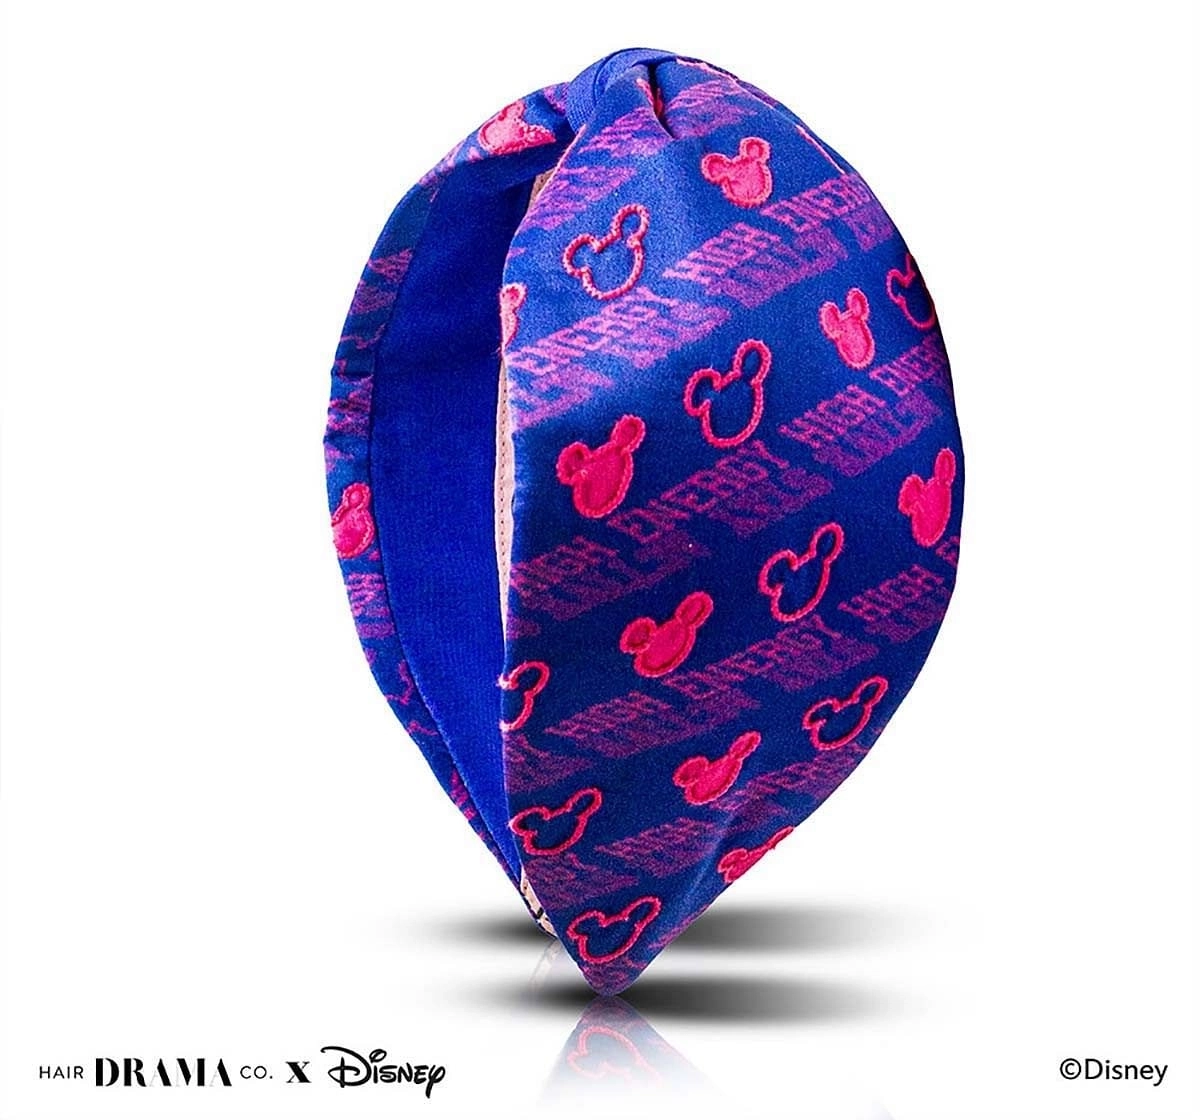 Hair Drama Company Disney Mickey Vibes Knotted Headband(One Size),  9Y+(Blue)